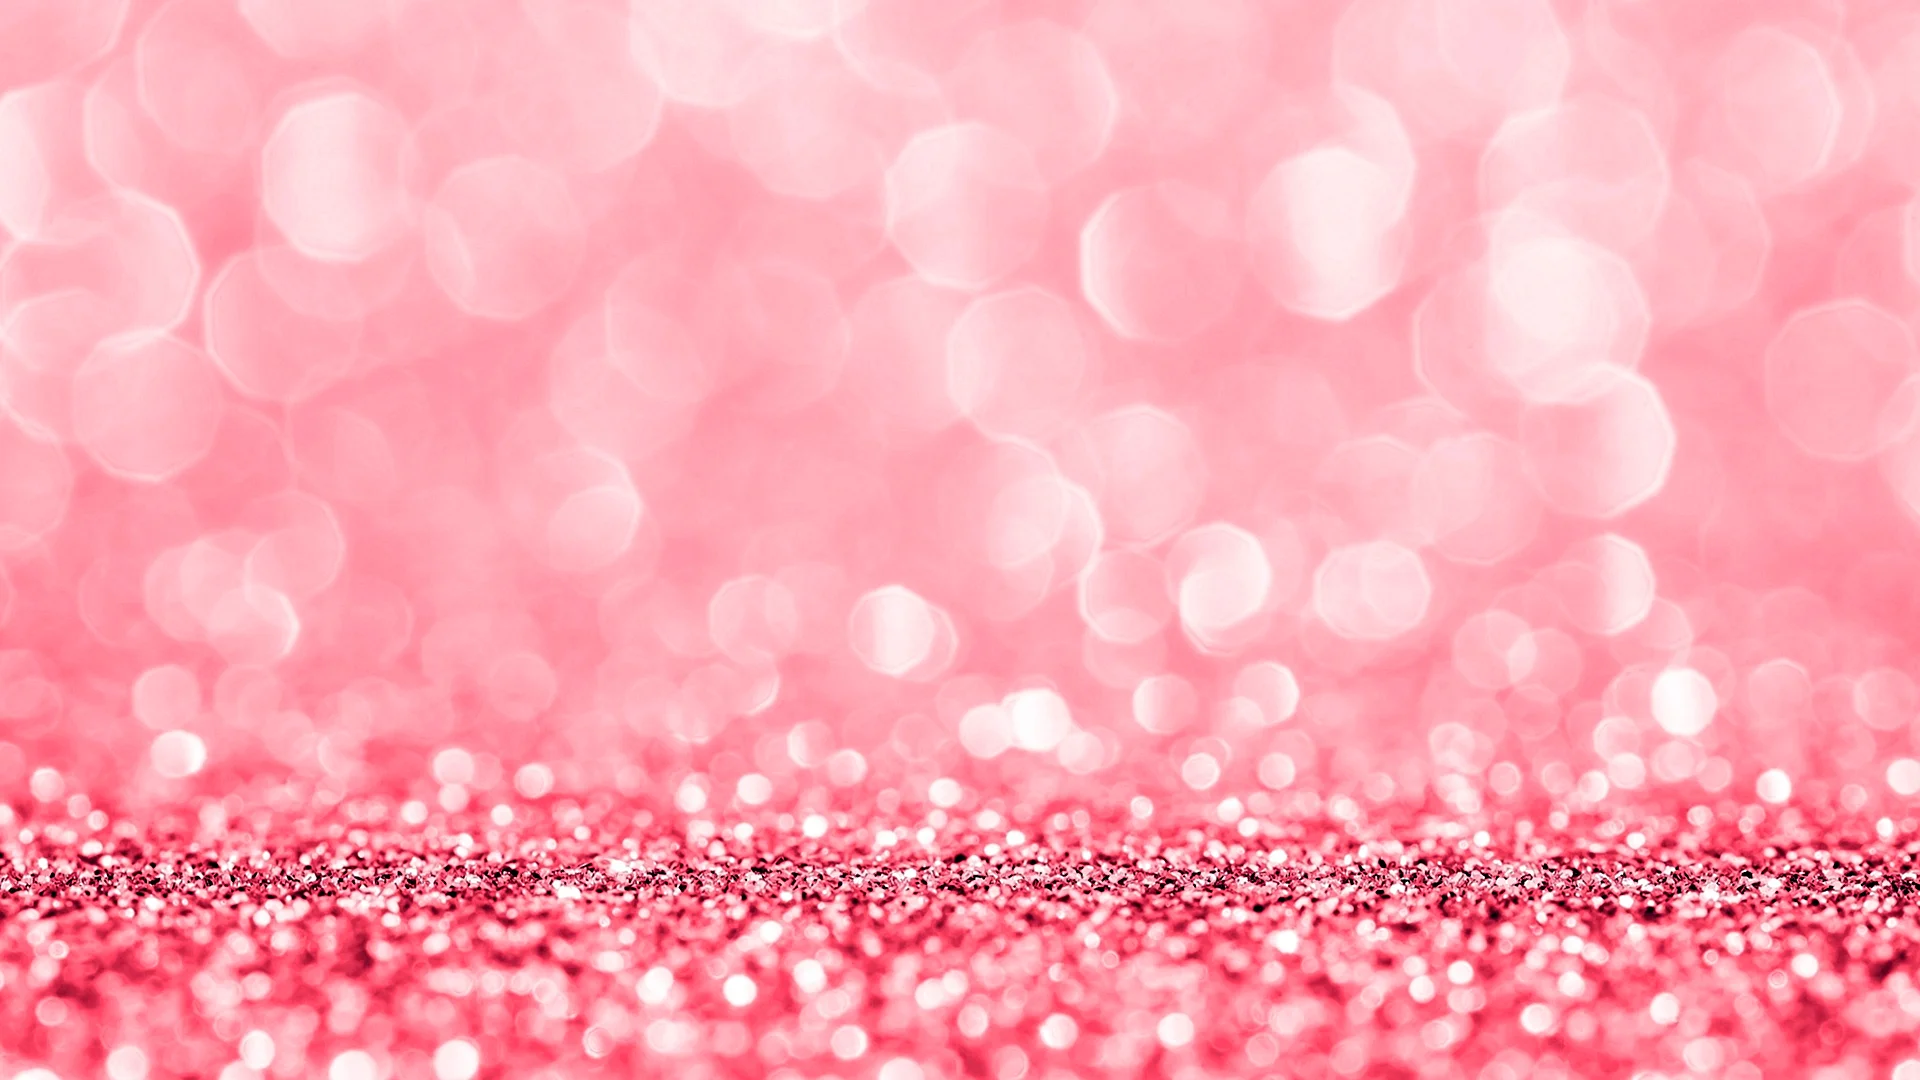 Pink glitter